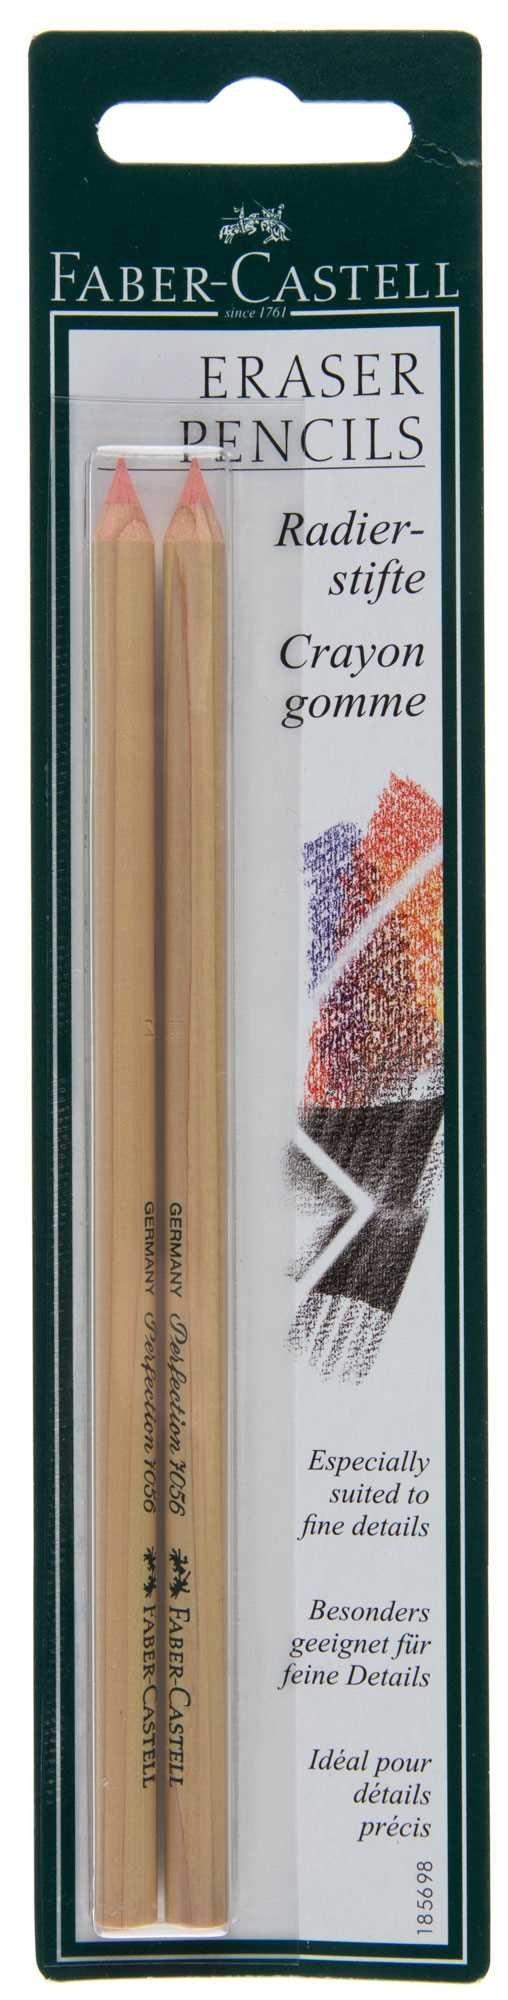  Faber-Castell 127321 Eraser - erasers - Random Color, 1 Unit :  Pencil Erasers : Office Products